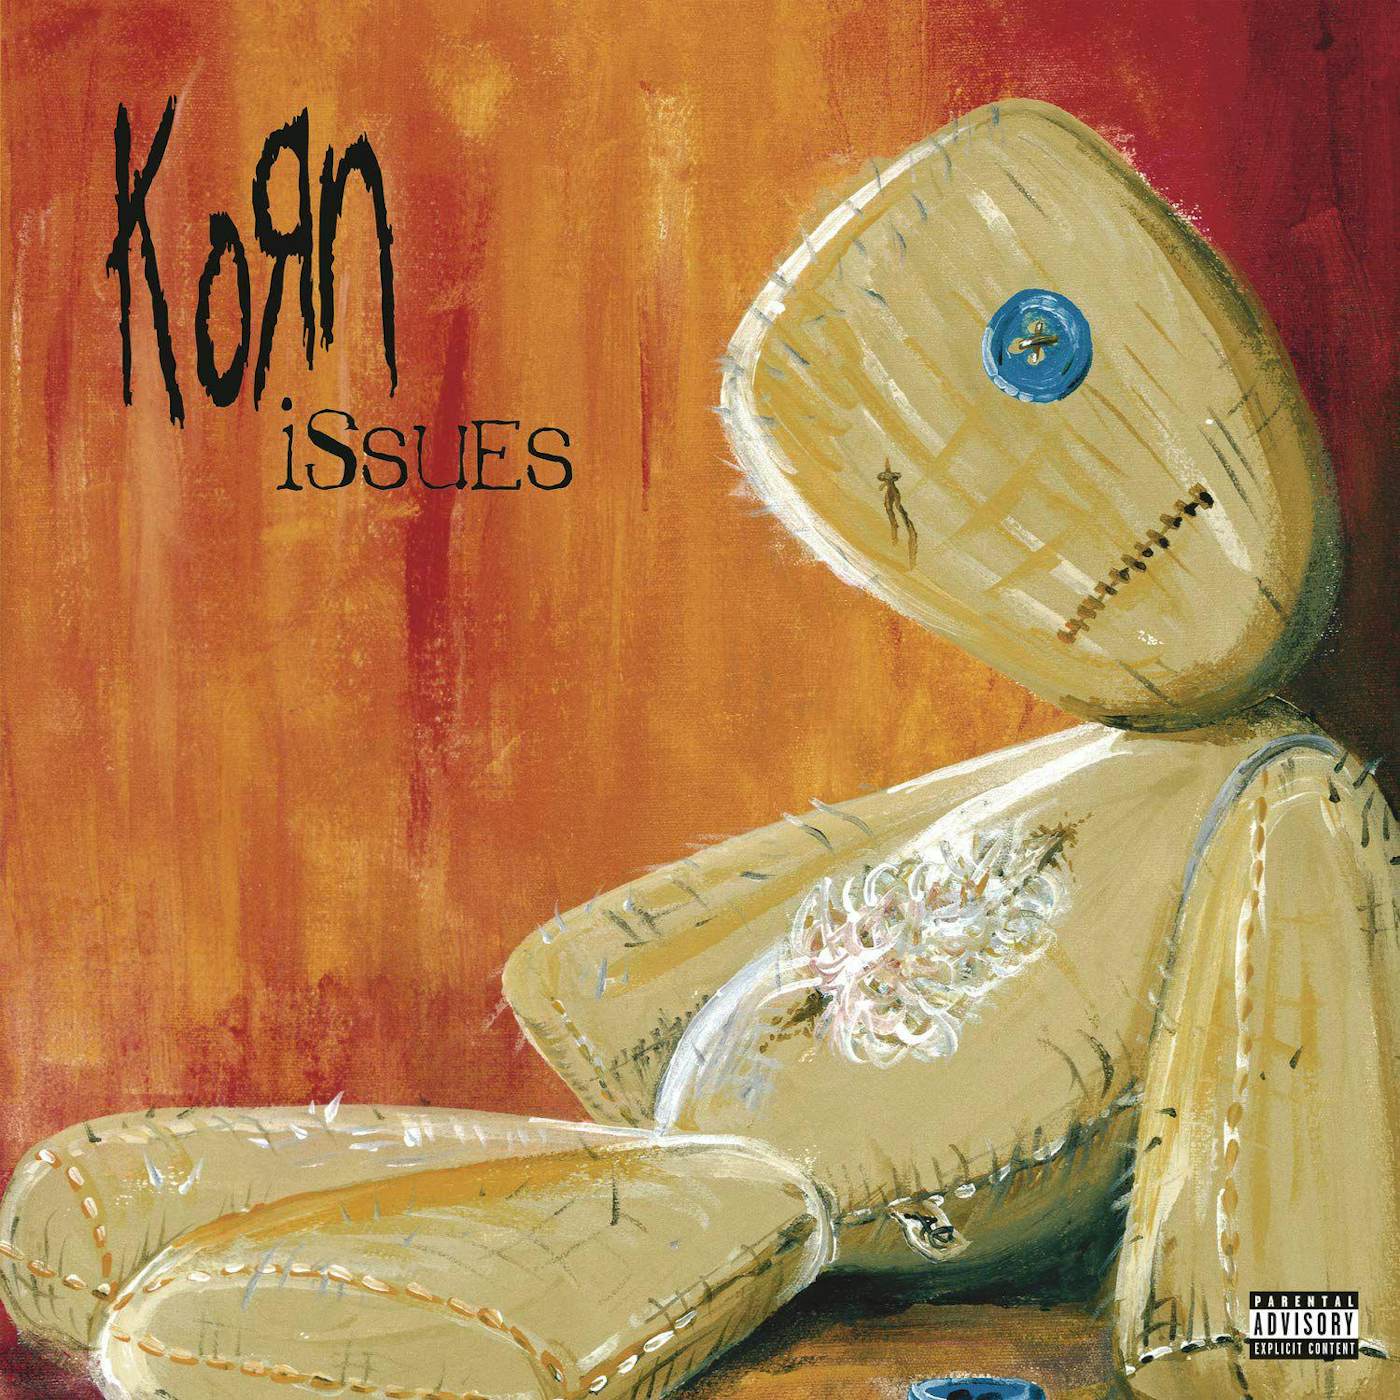 Korn Issues (2LP) Vinyl Record